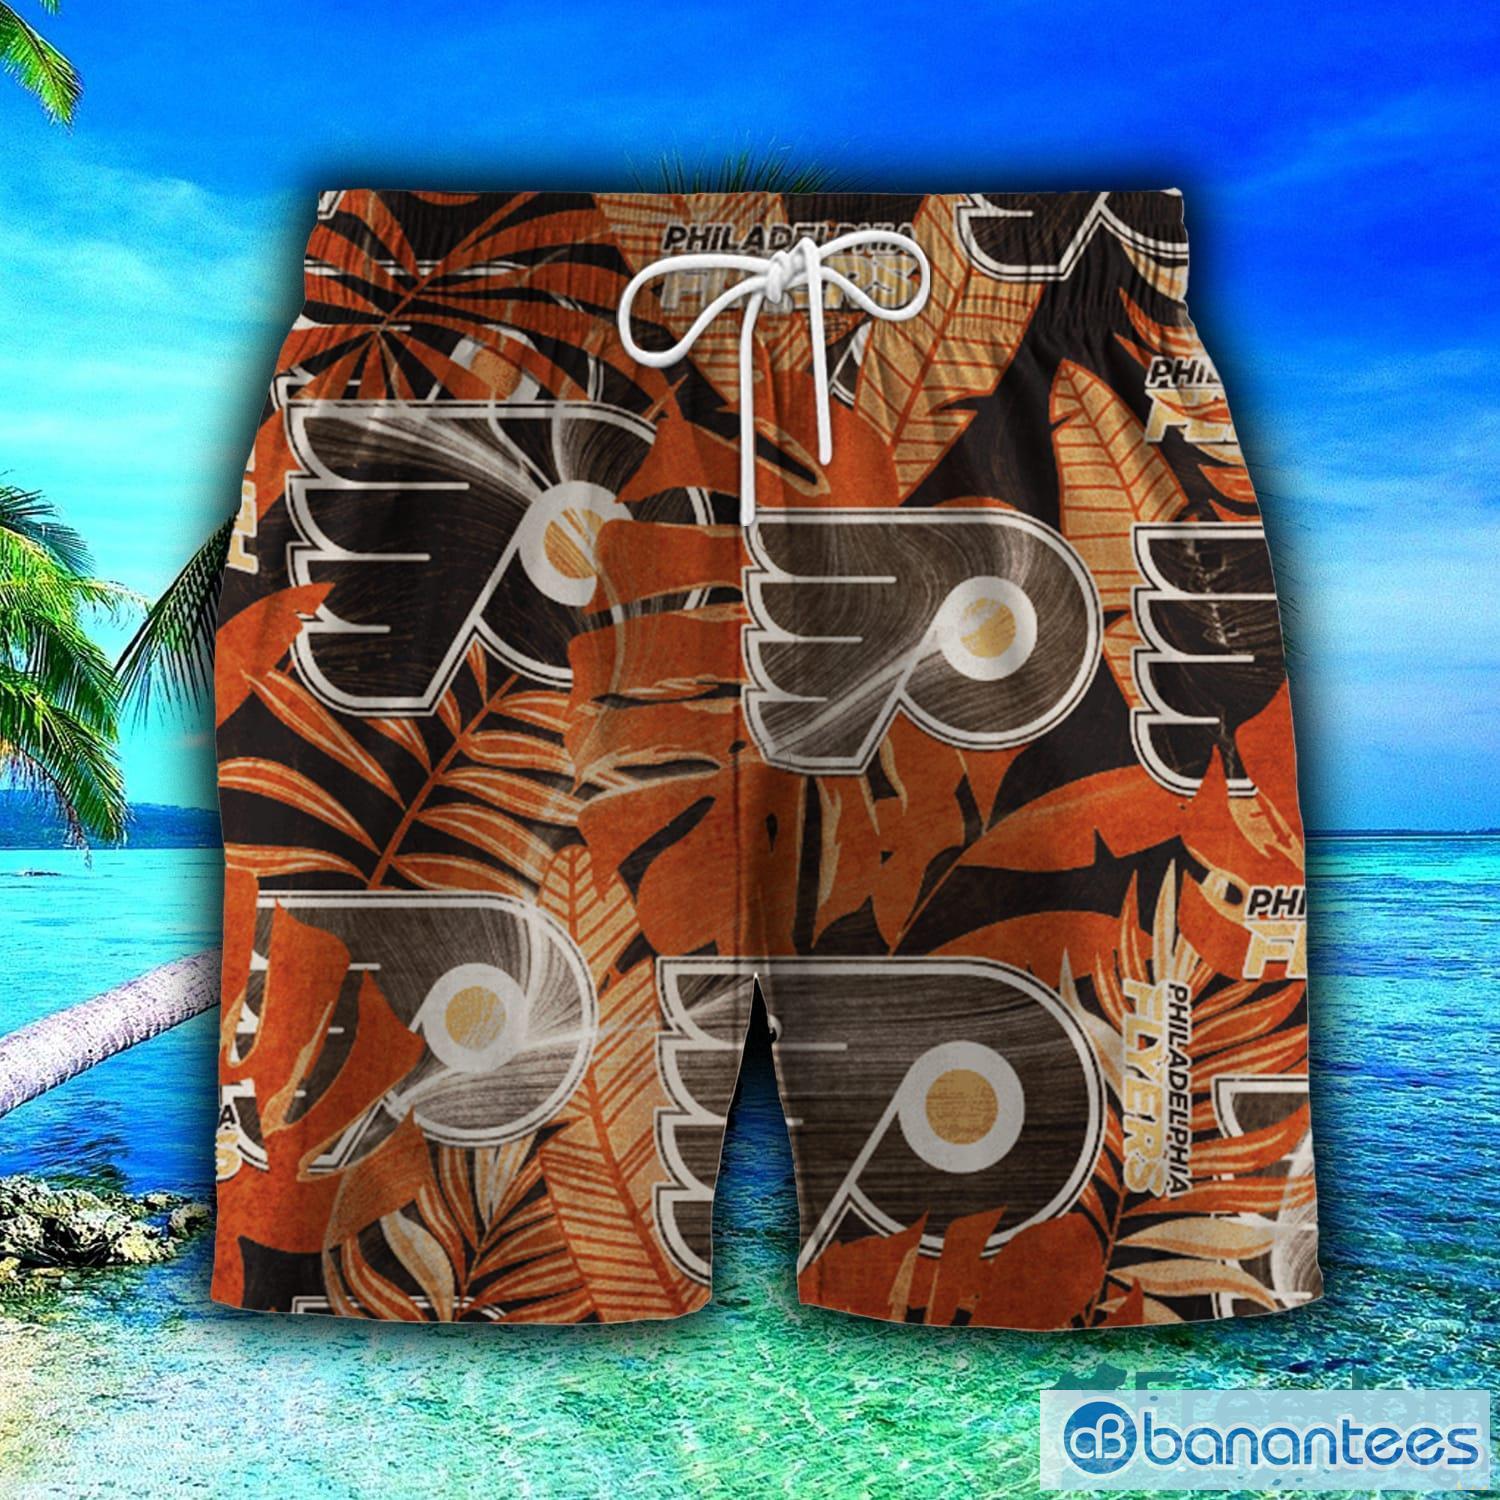 Pittsburgh Penguins NHL Flower Hawaiian Shirt Style Gift For Men Women Fans